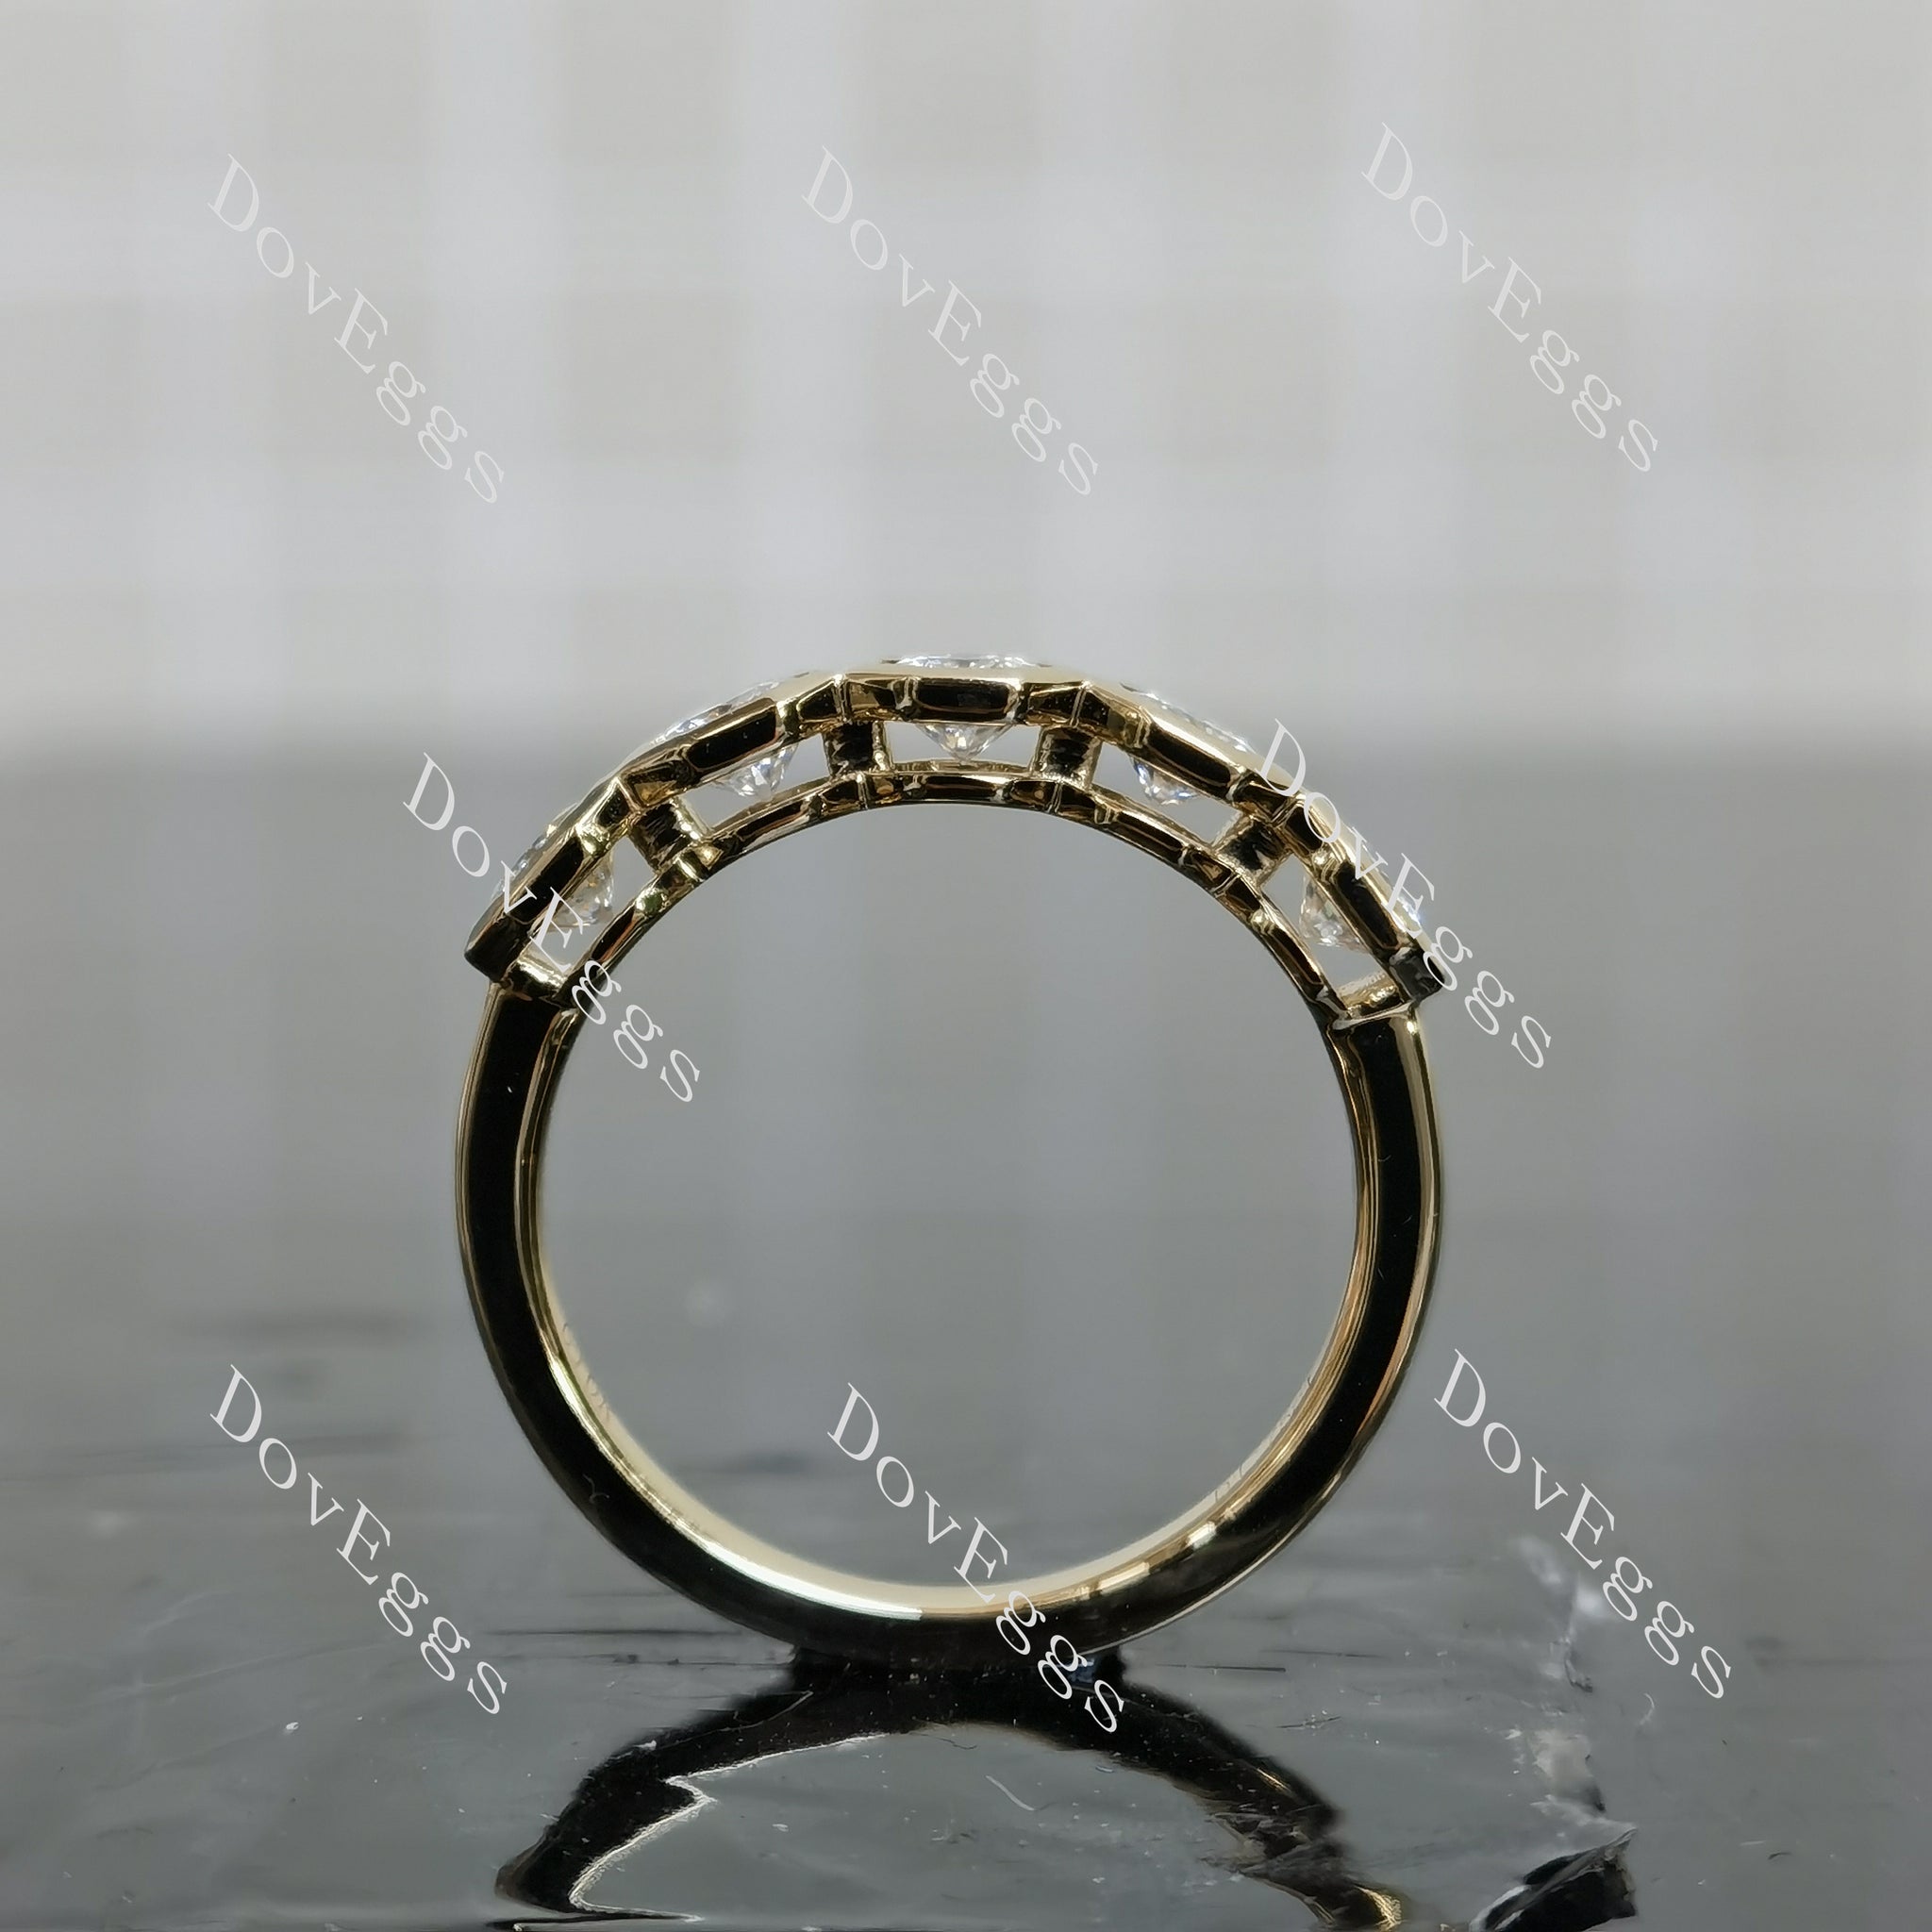 Doveggs octagon bezel five stones moissanite wedding band-2mm band width